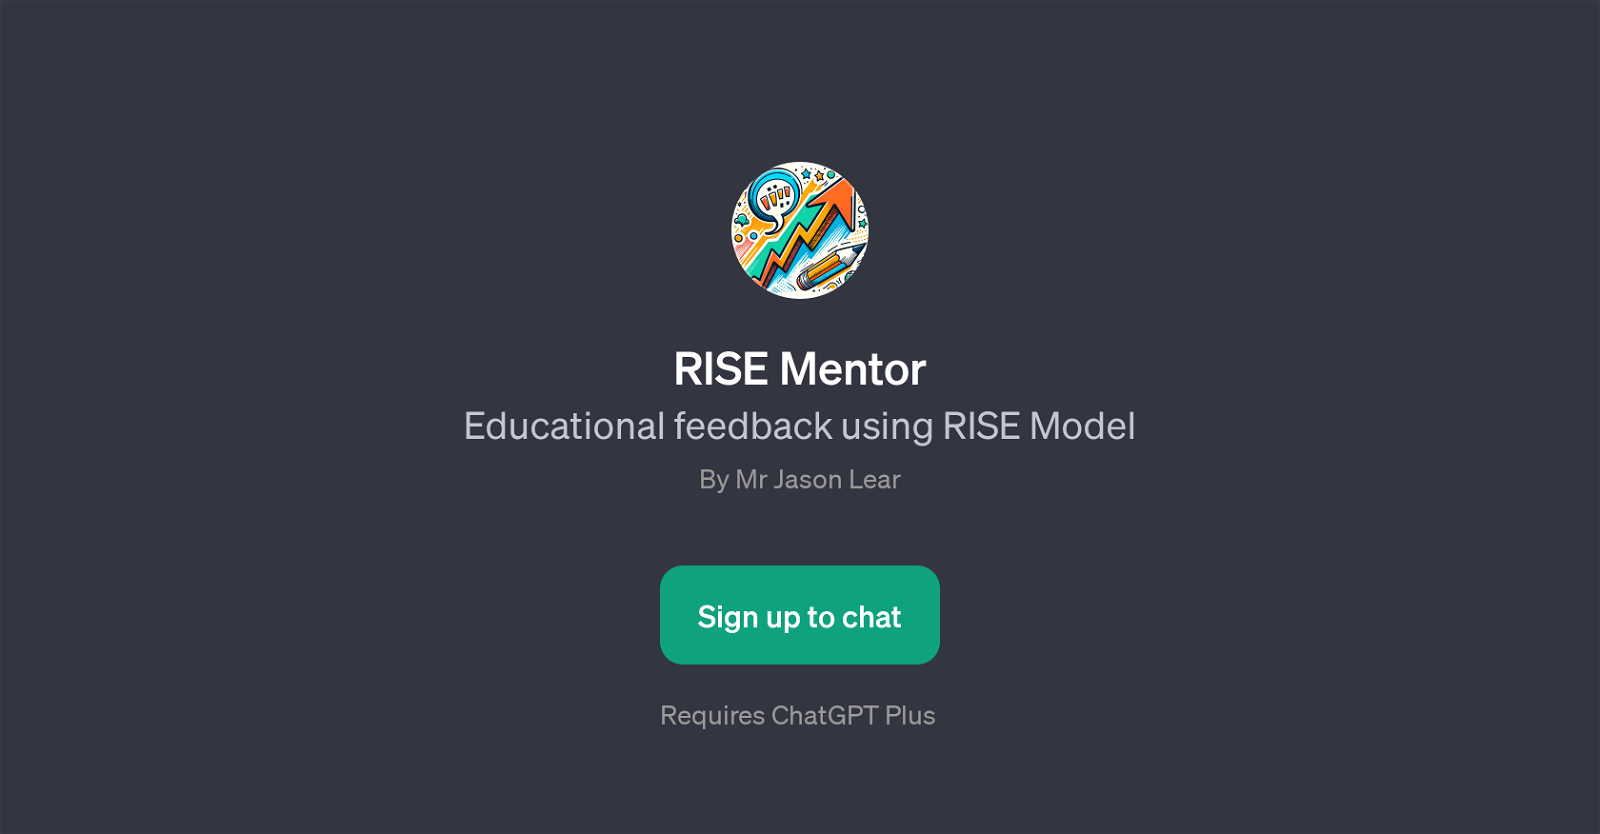 RISE Mentor website